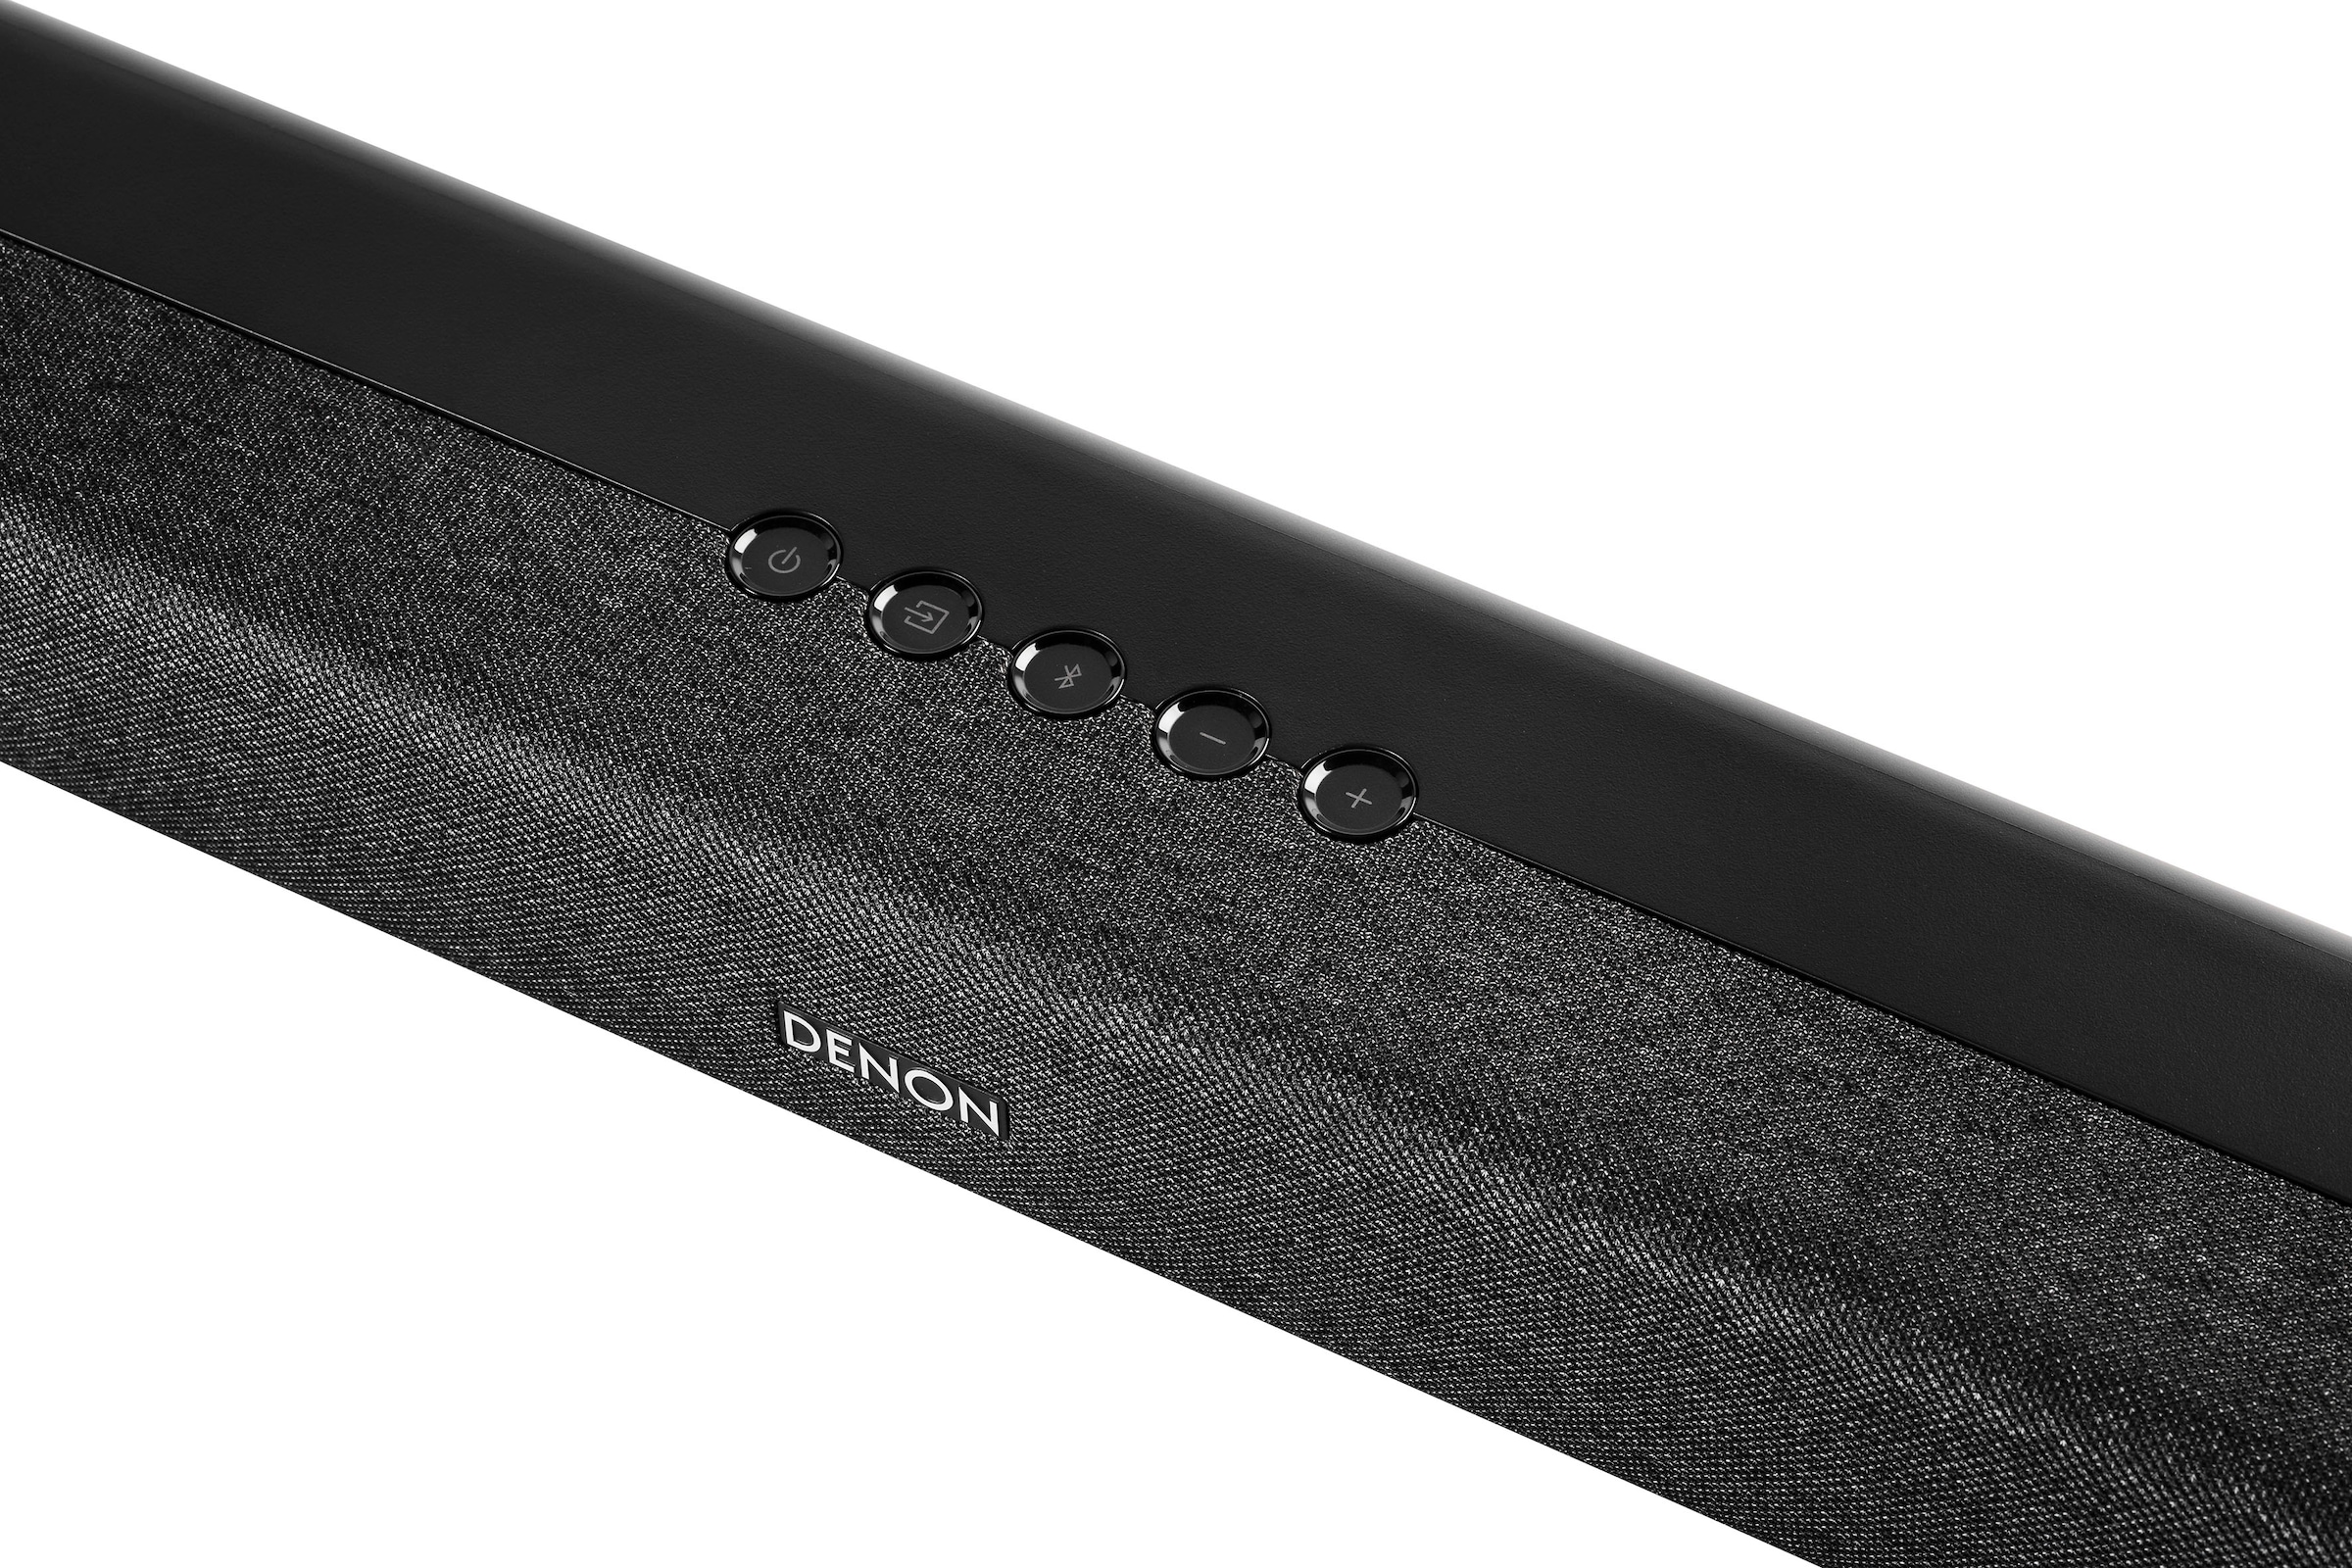 Denon Soundbar »DHT-S416«, kabelloser Subwoofer, Chromecast, HDMI ARC | BAUR